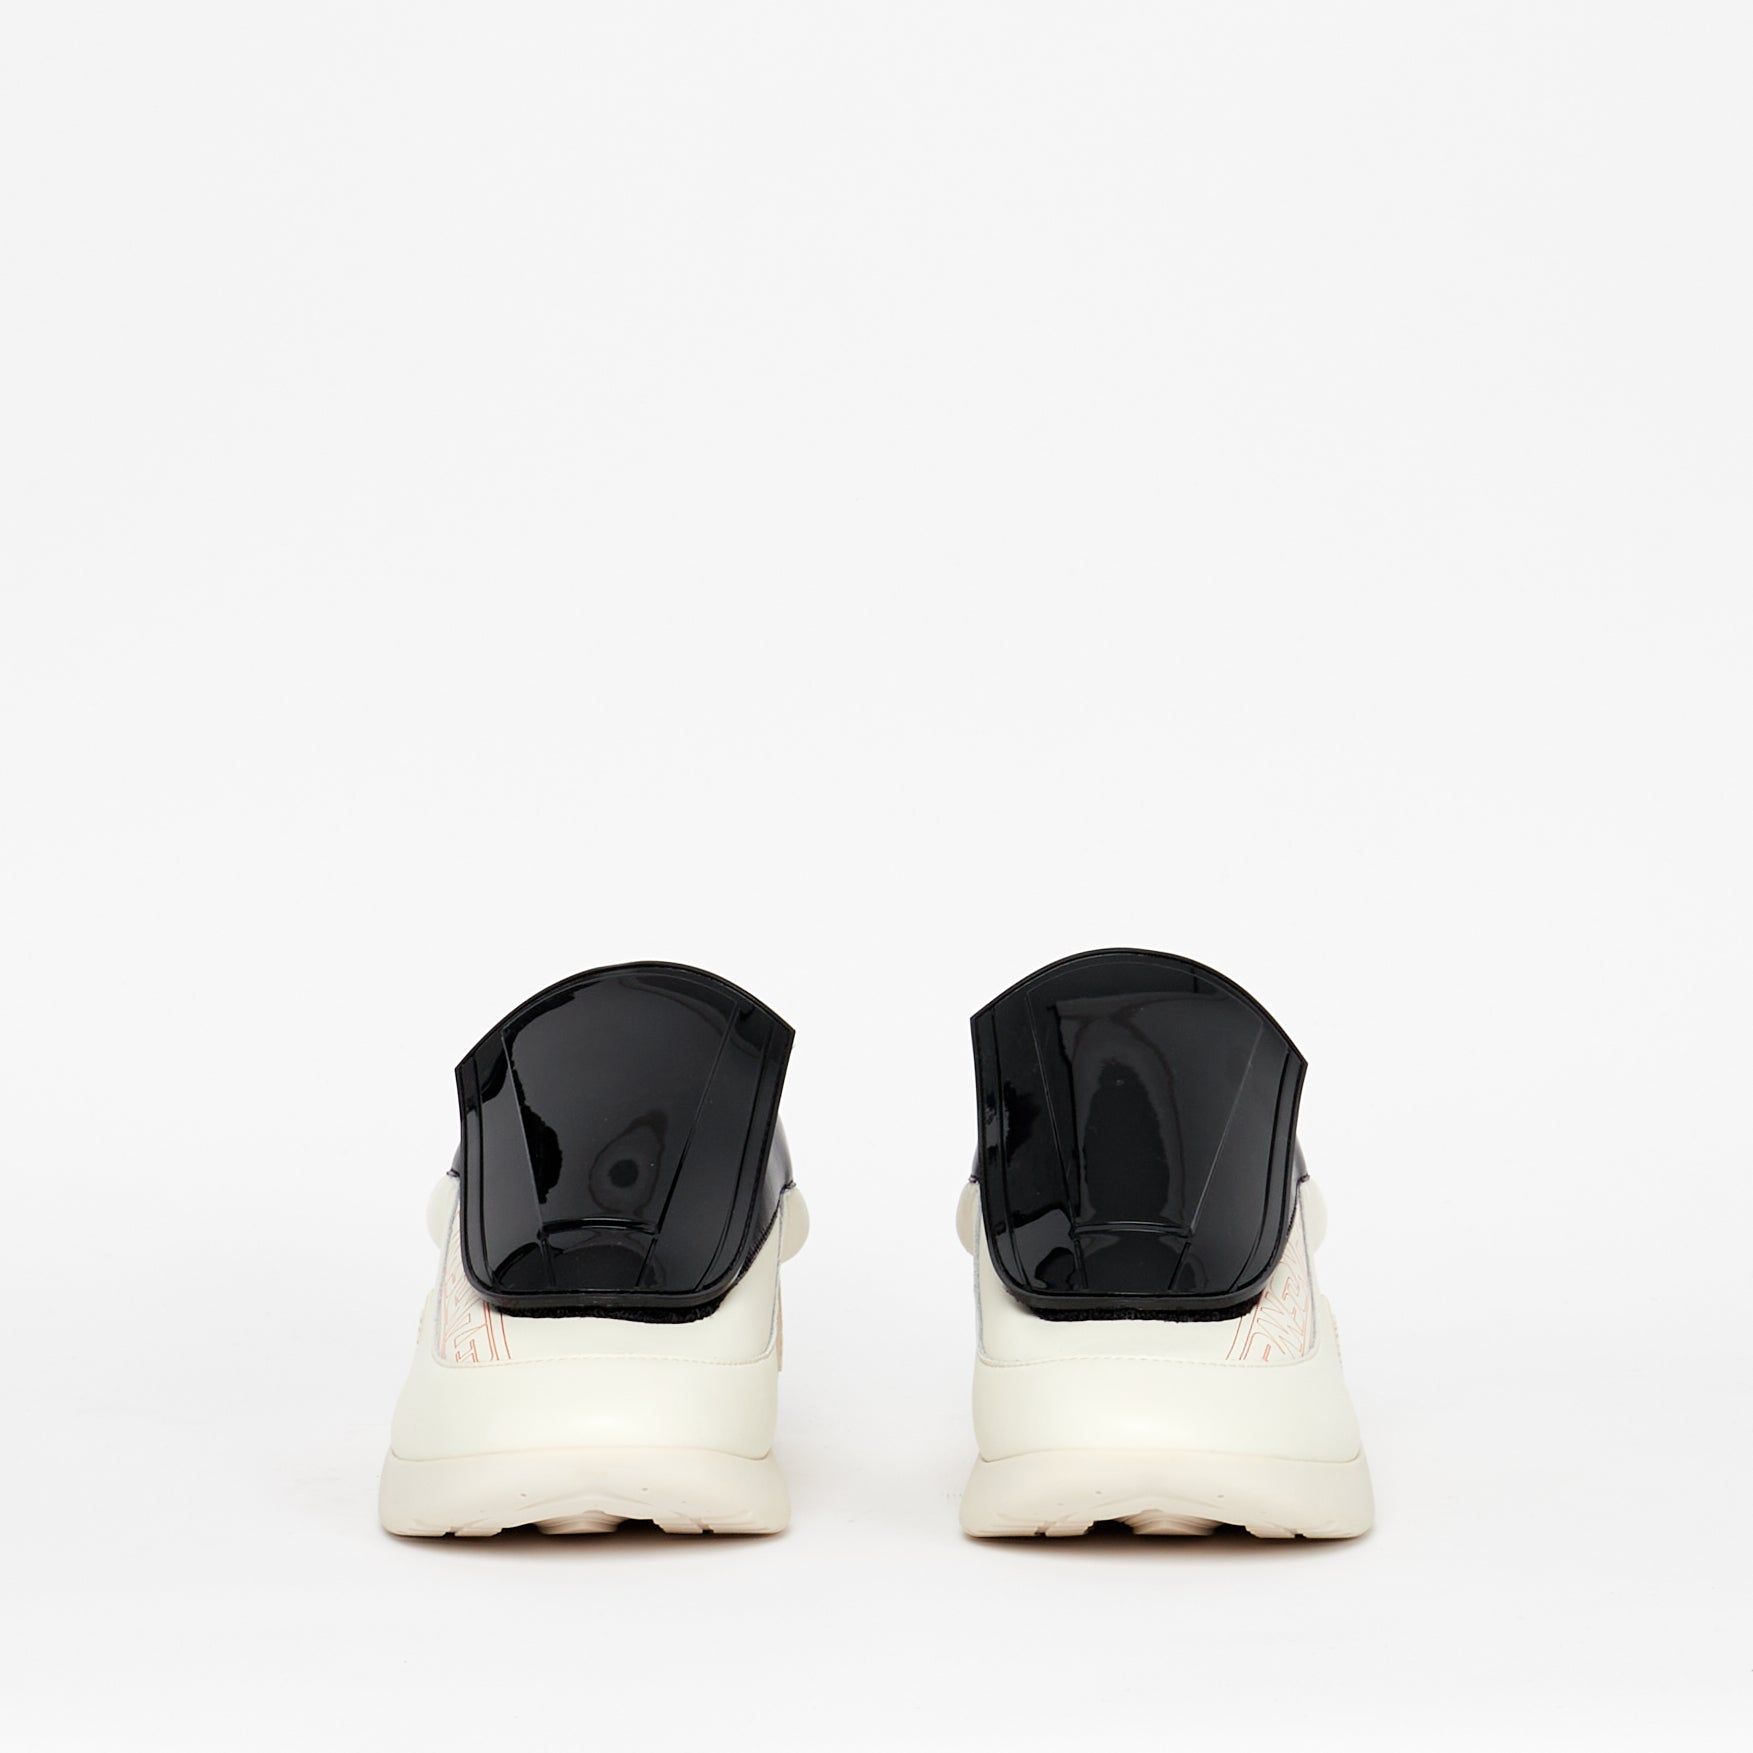 Sneaker Antei Black White Cream - Lesthete raf simons